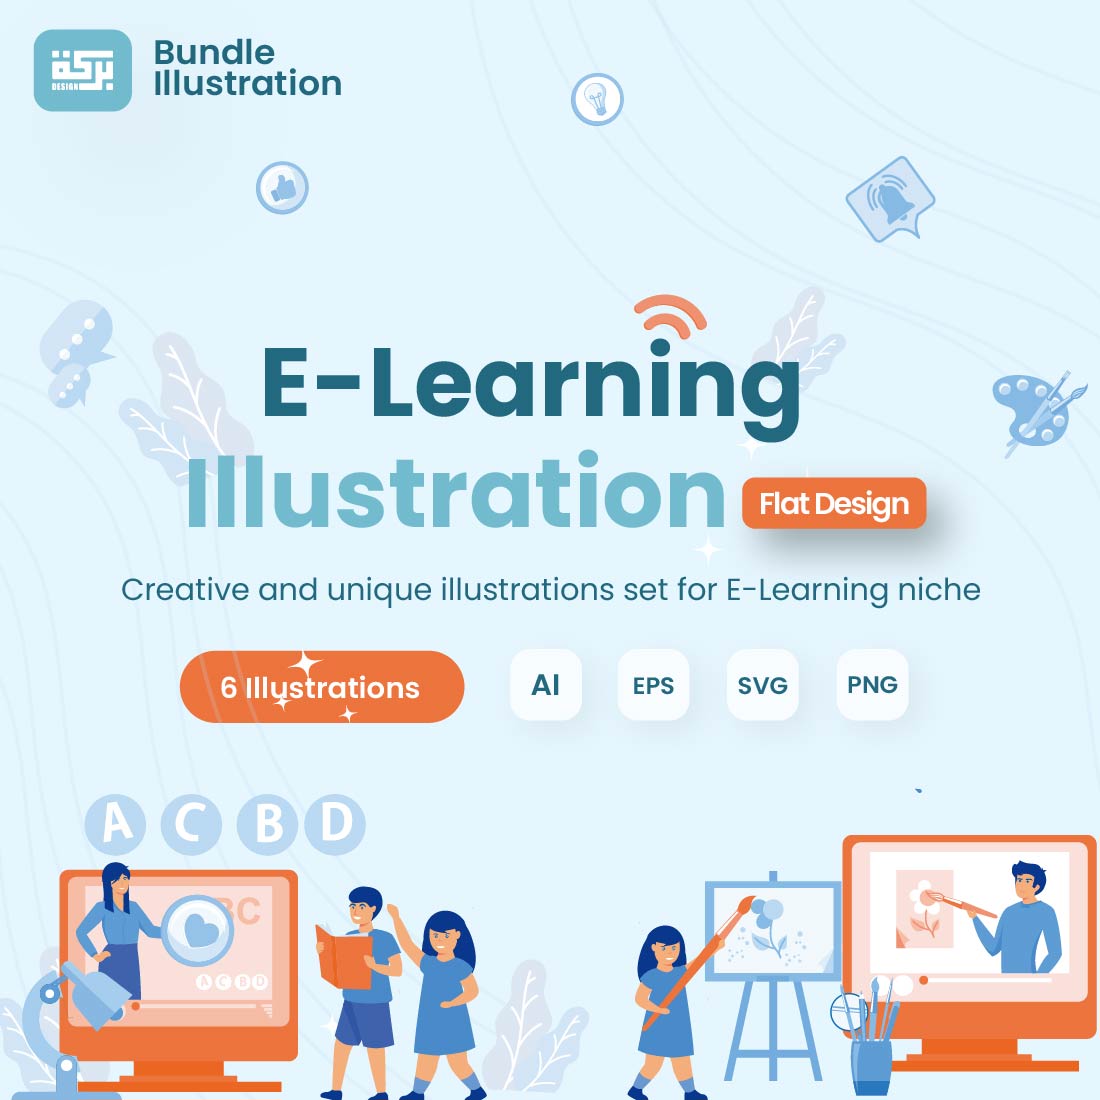 E- Learning Illustration Design cover image.